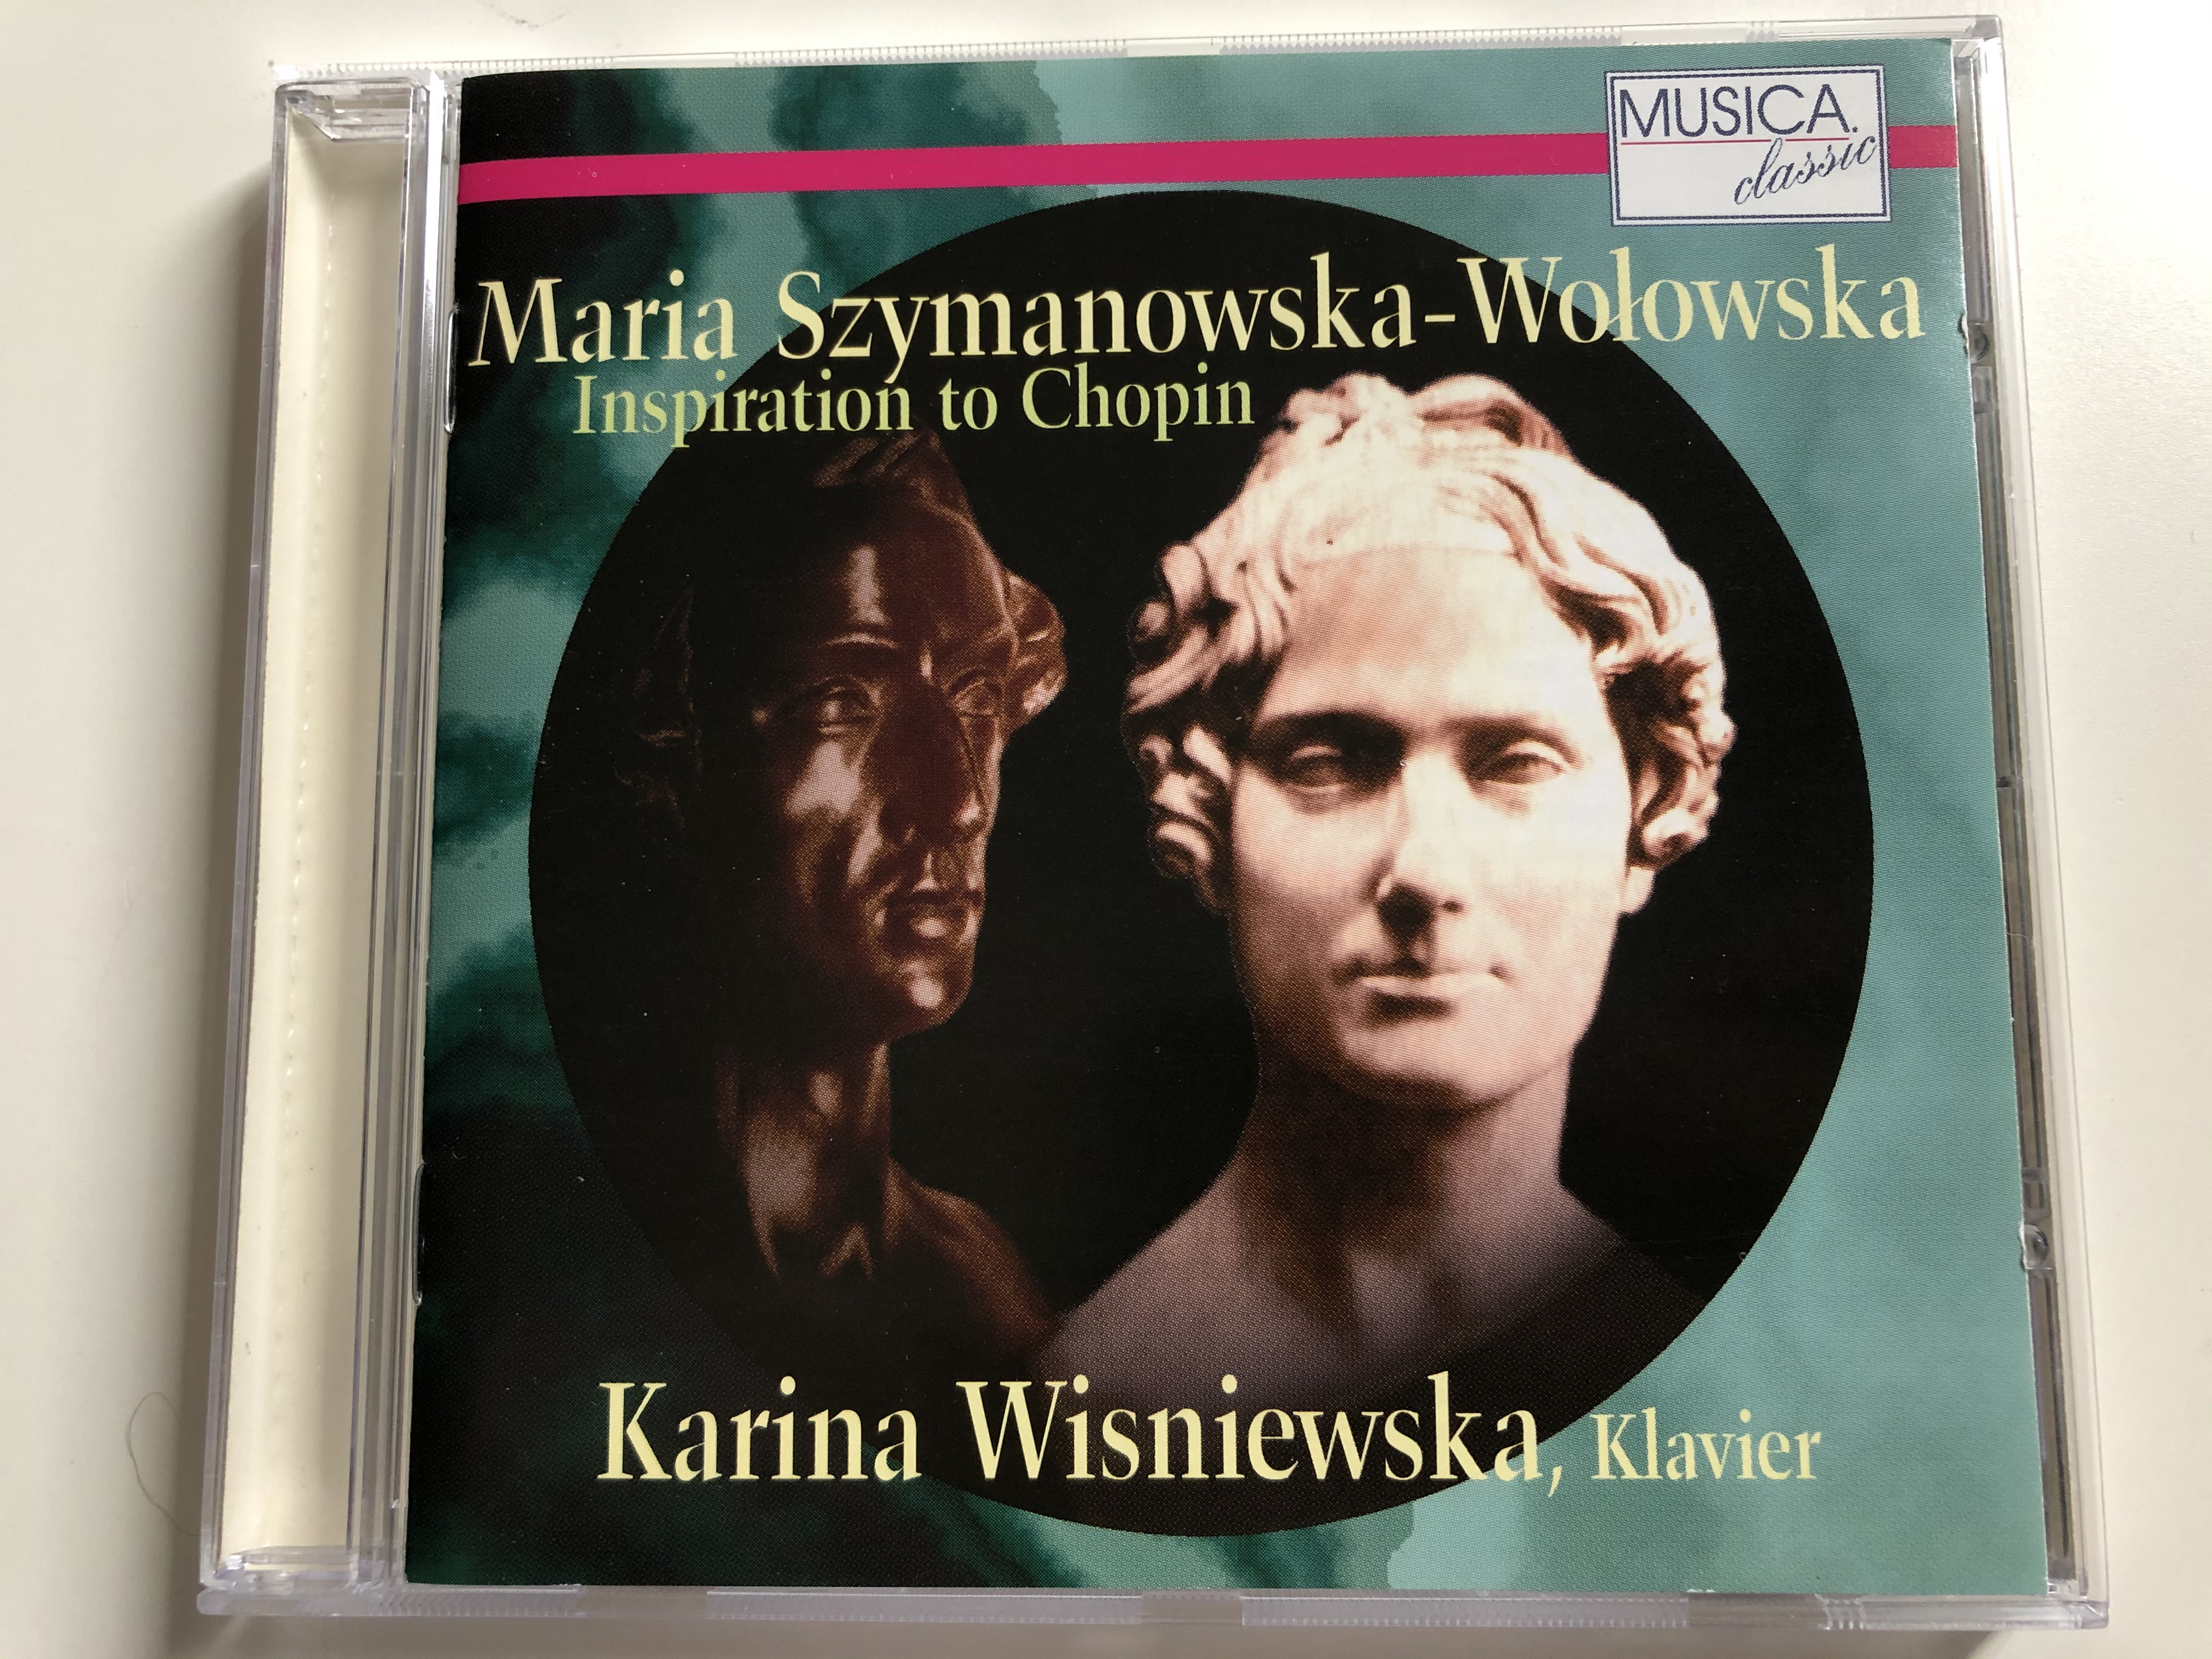 maria-szymanowska-wolowska-inspiration-to-chopin-klavier-karina-wisniewaska-musica-classic-audio-cd-1996-780024-2-1-.jpg